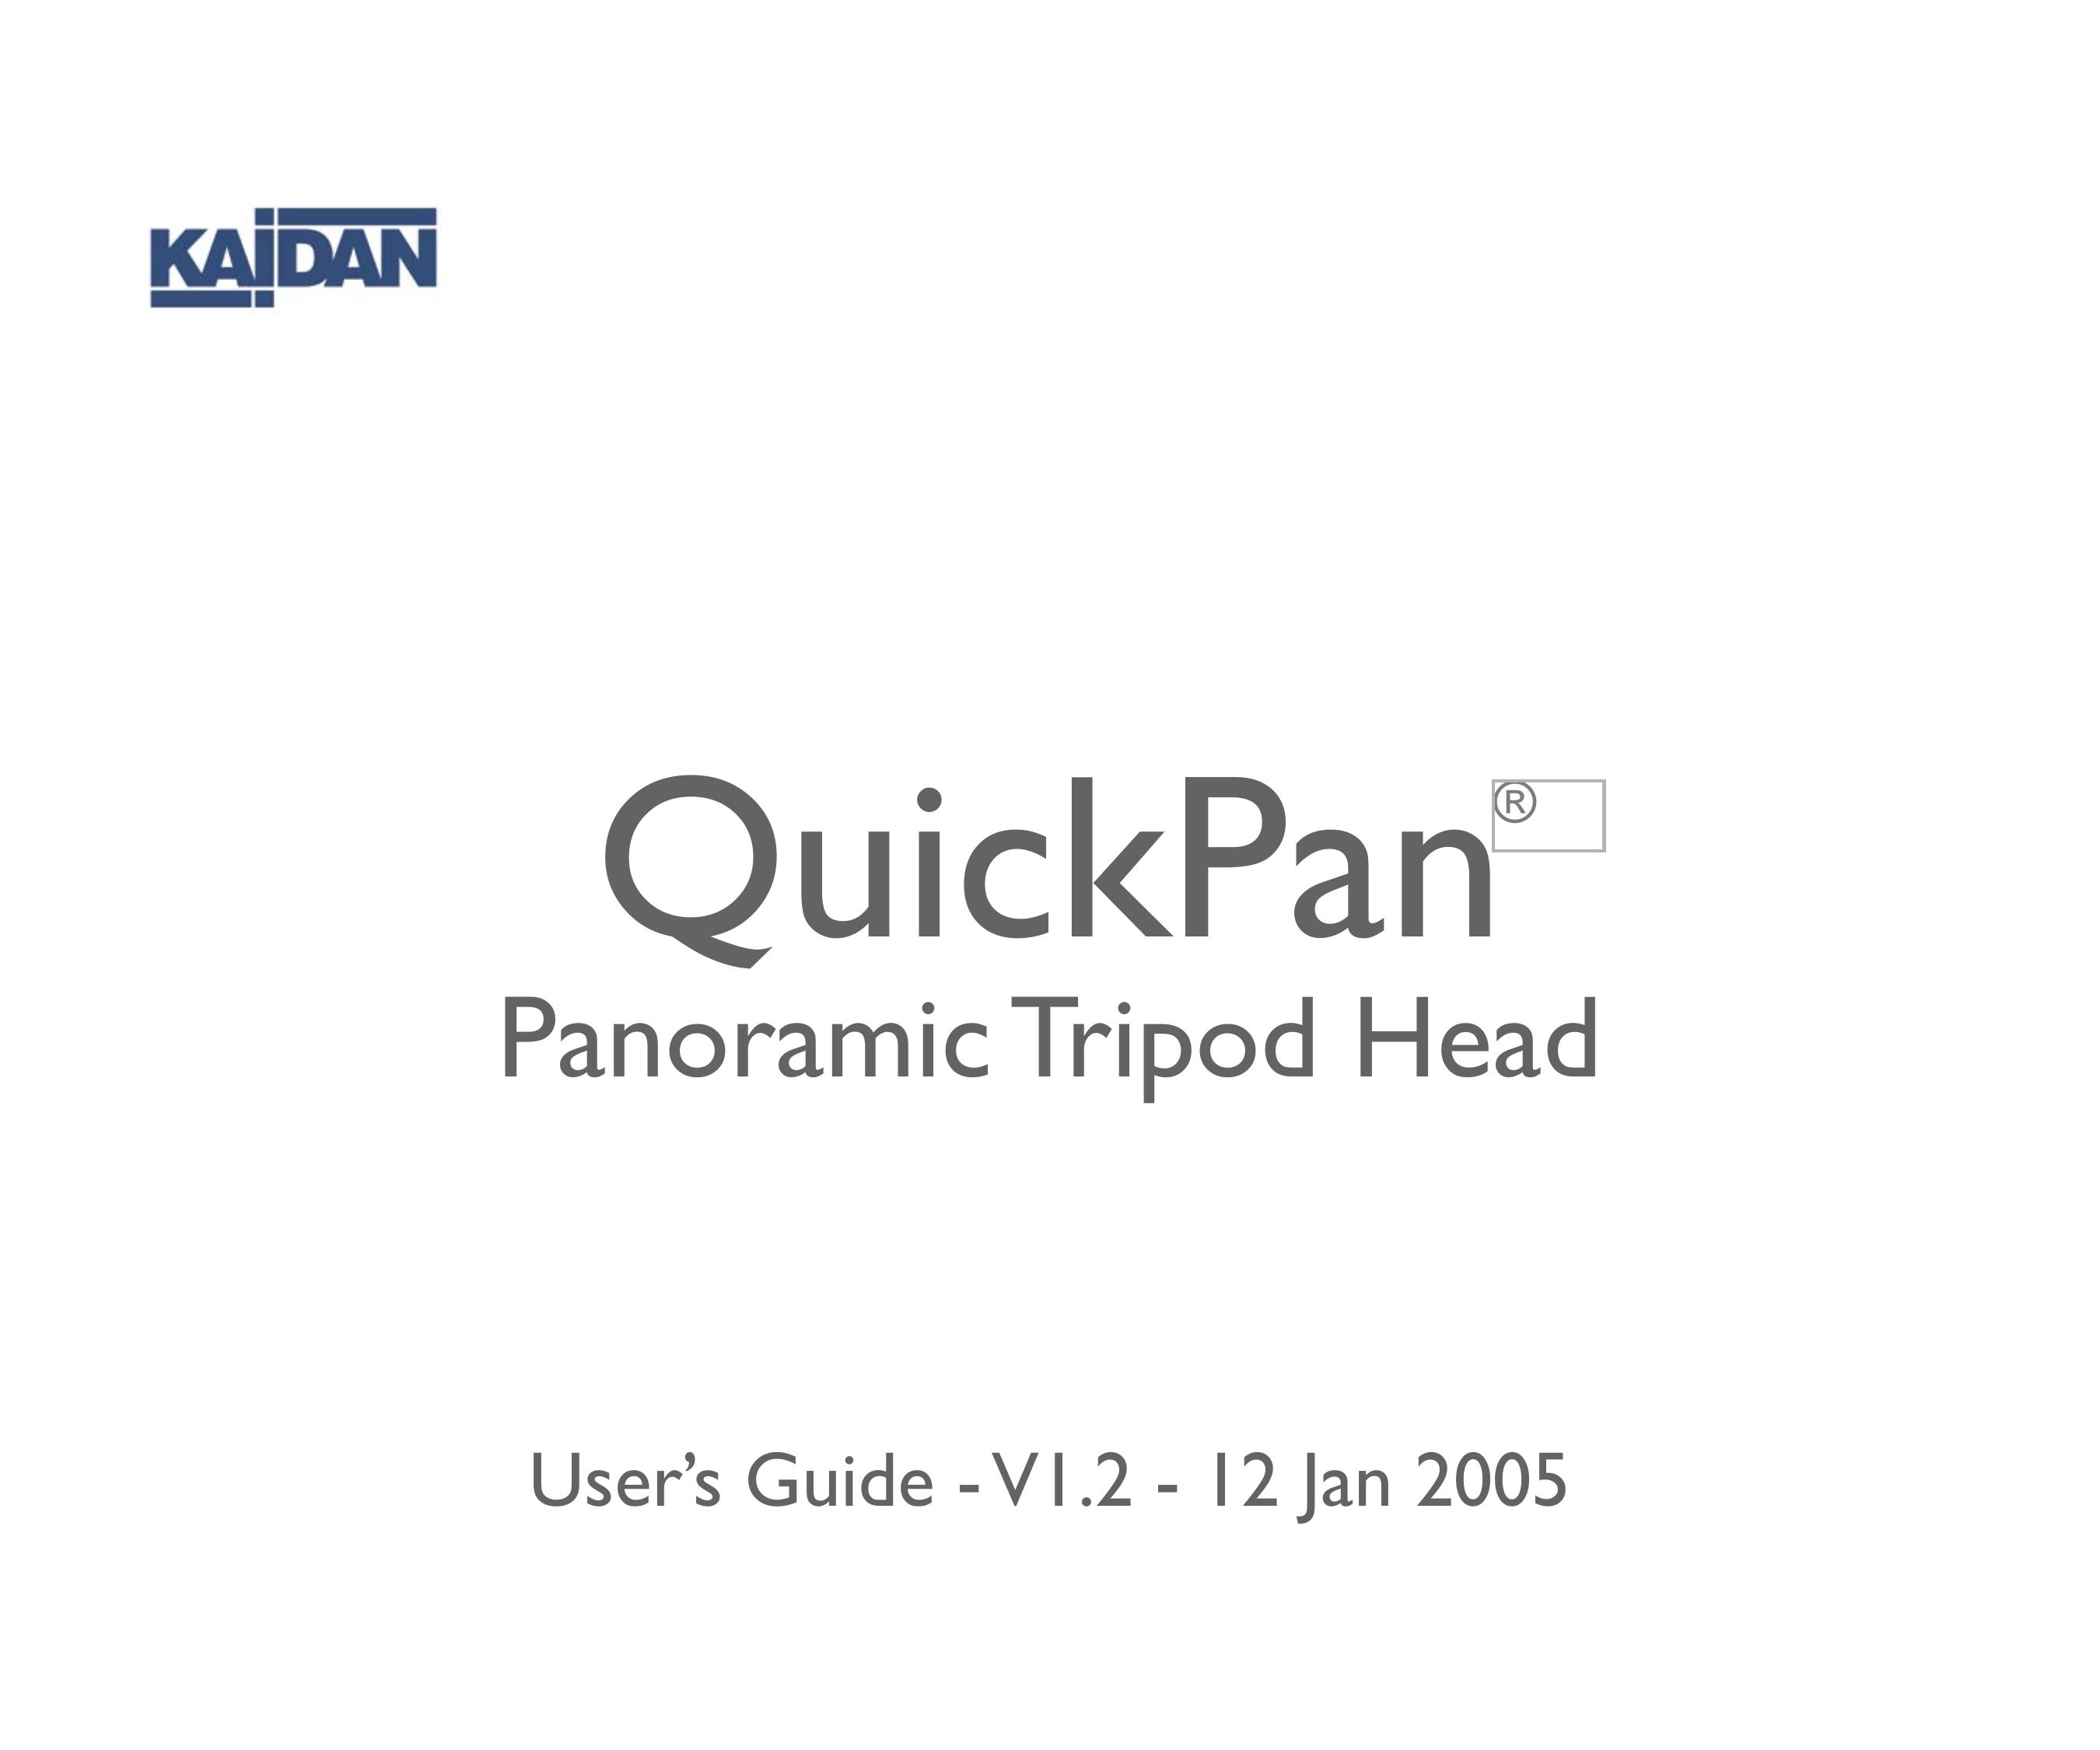 Kaidan QuickPan Panoramic Tripod Head Camera Accessories User Manual